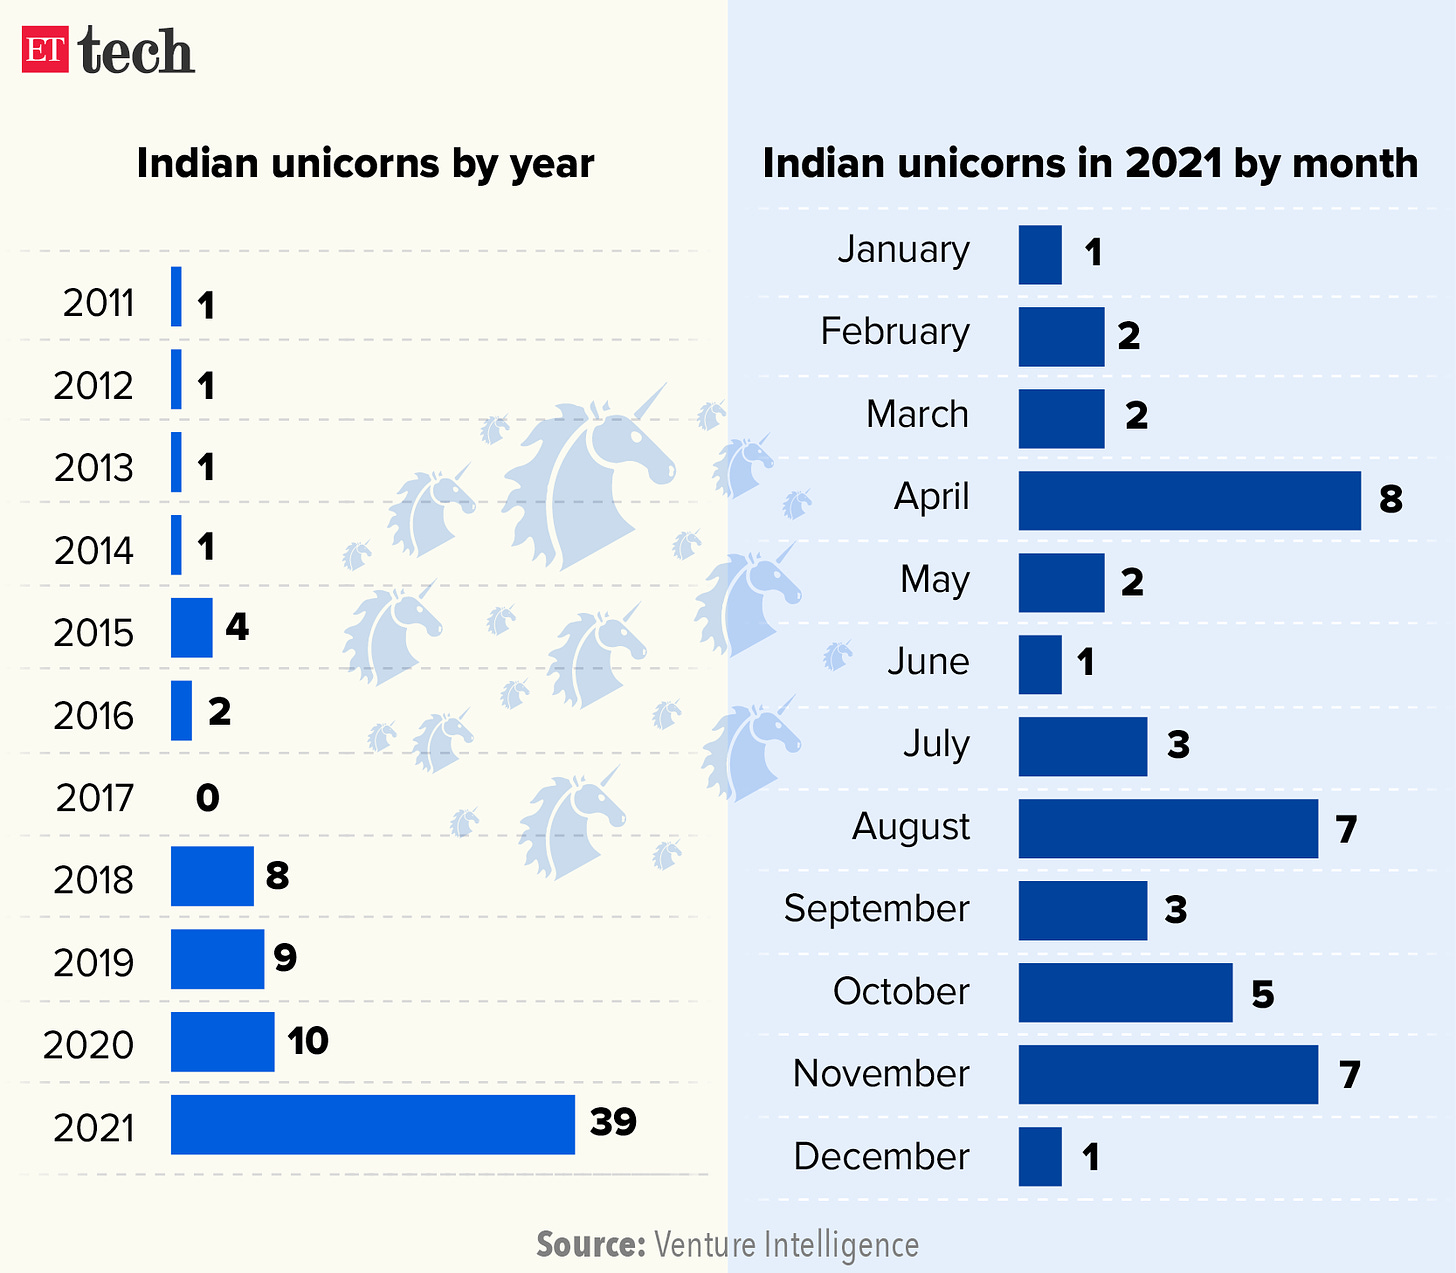 Indian unicorns by year